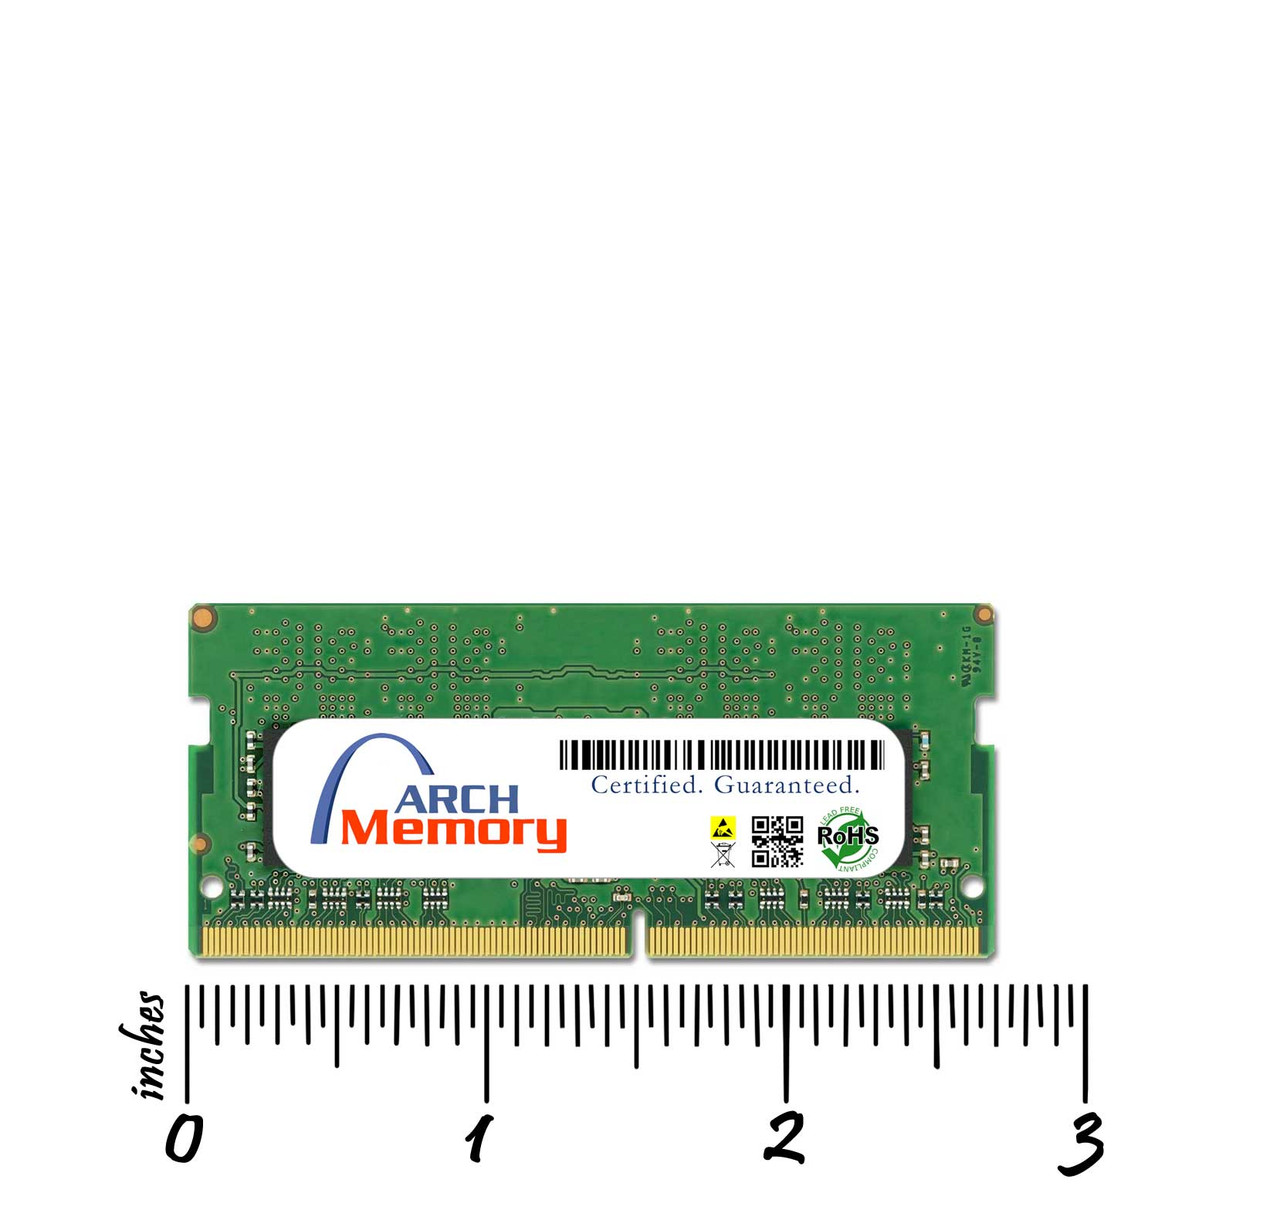 8GB 260-Pin DDR4-2666 PC4-21300 Sodimm RAM | Memory for MSI